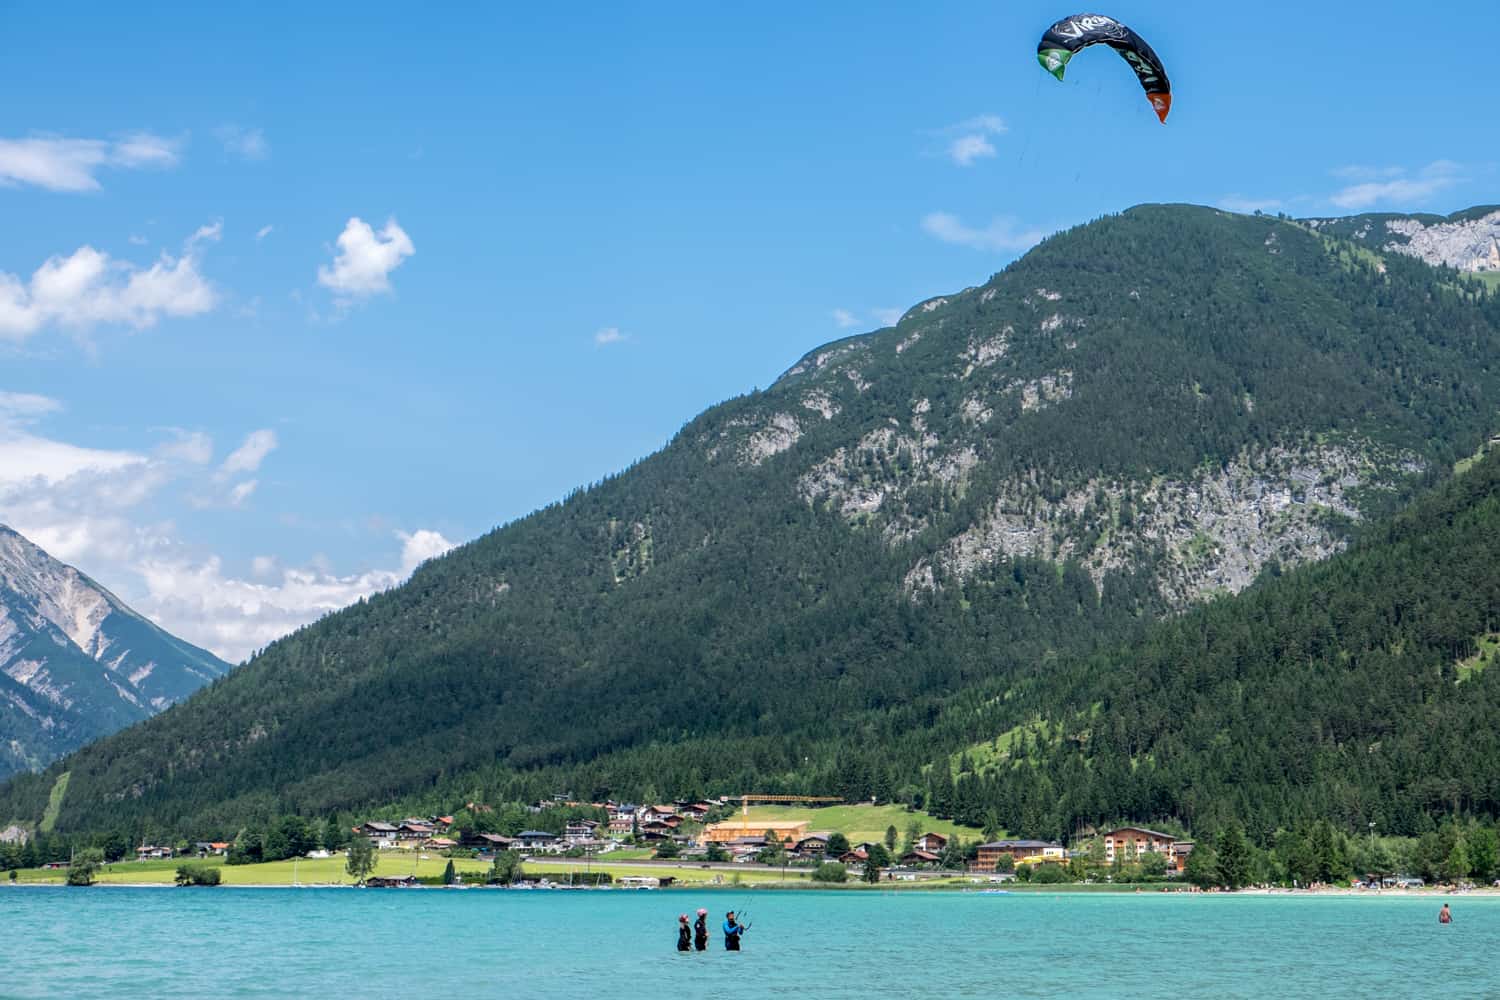 Kitesurfing lessons on Achensee Lake, Tirol, Austria